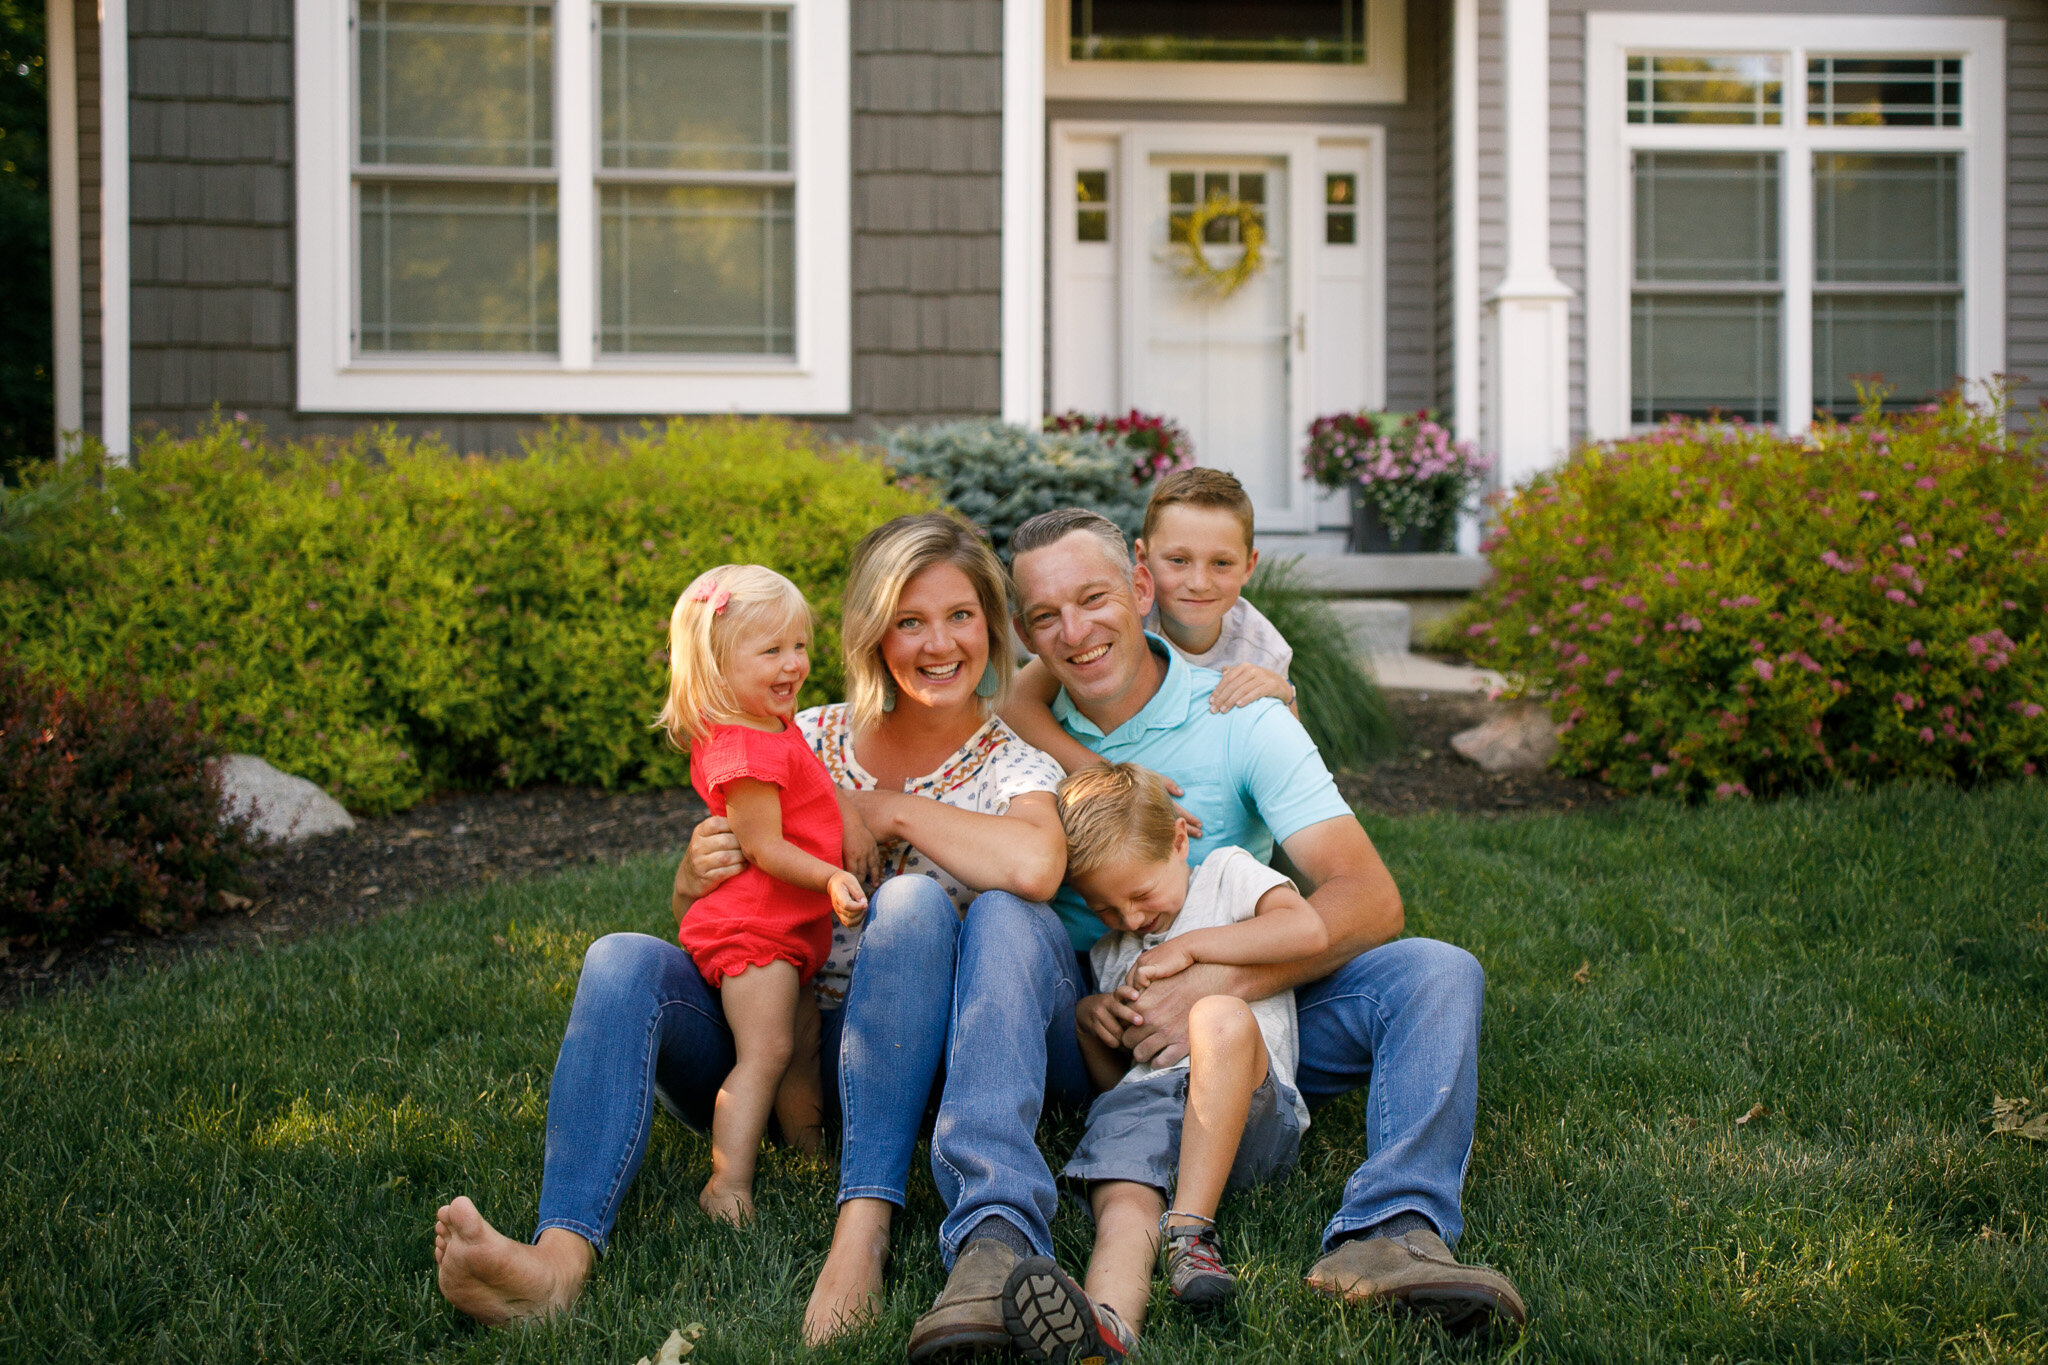 Clabuesch Family - Grand Rapids Family Photographer - Grand Rapids Lifestyle Photographer - Jessica Darling - J Darling Photo012.jpg